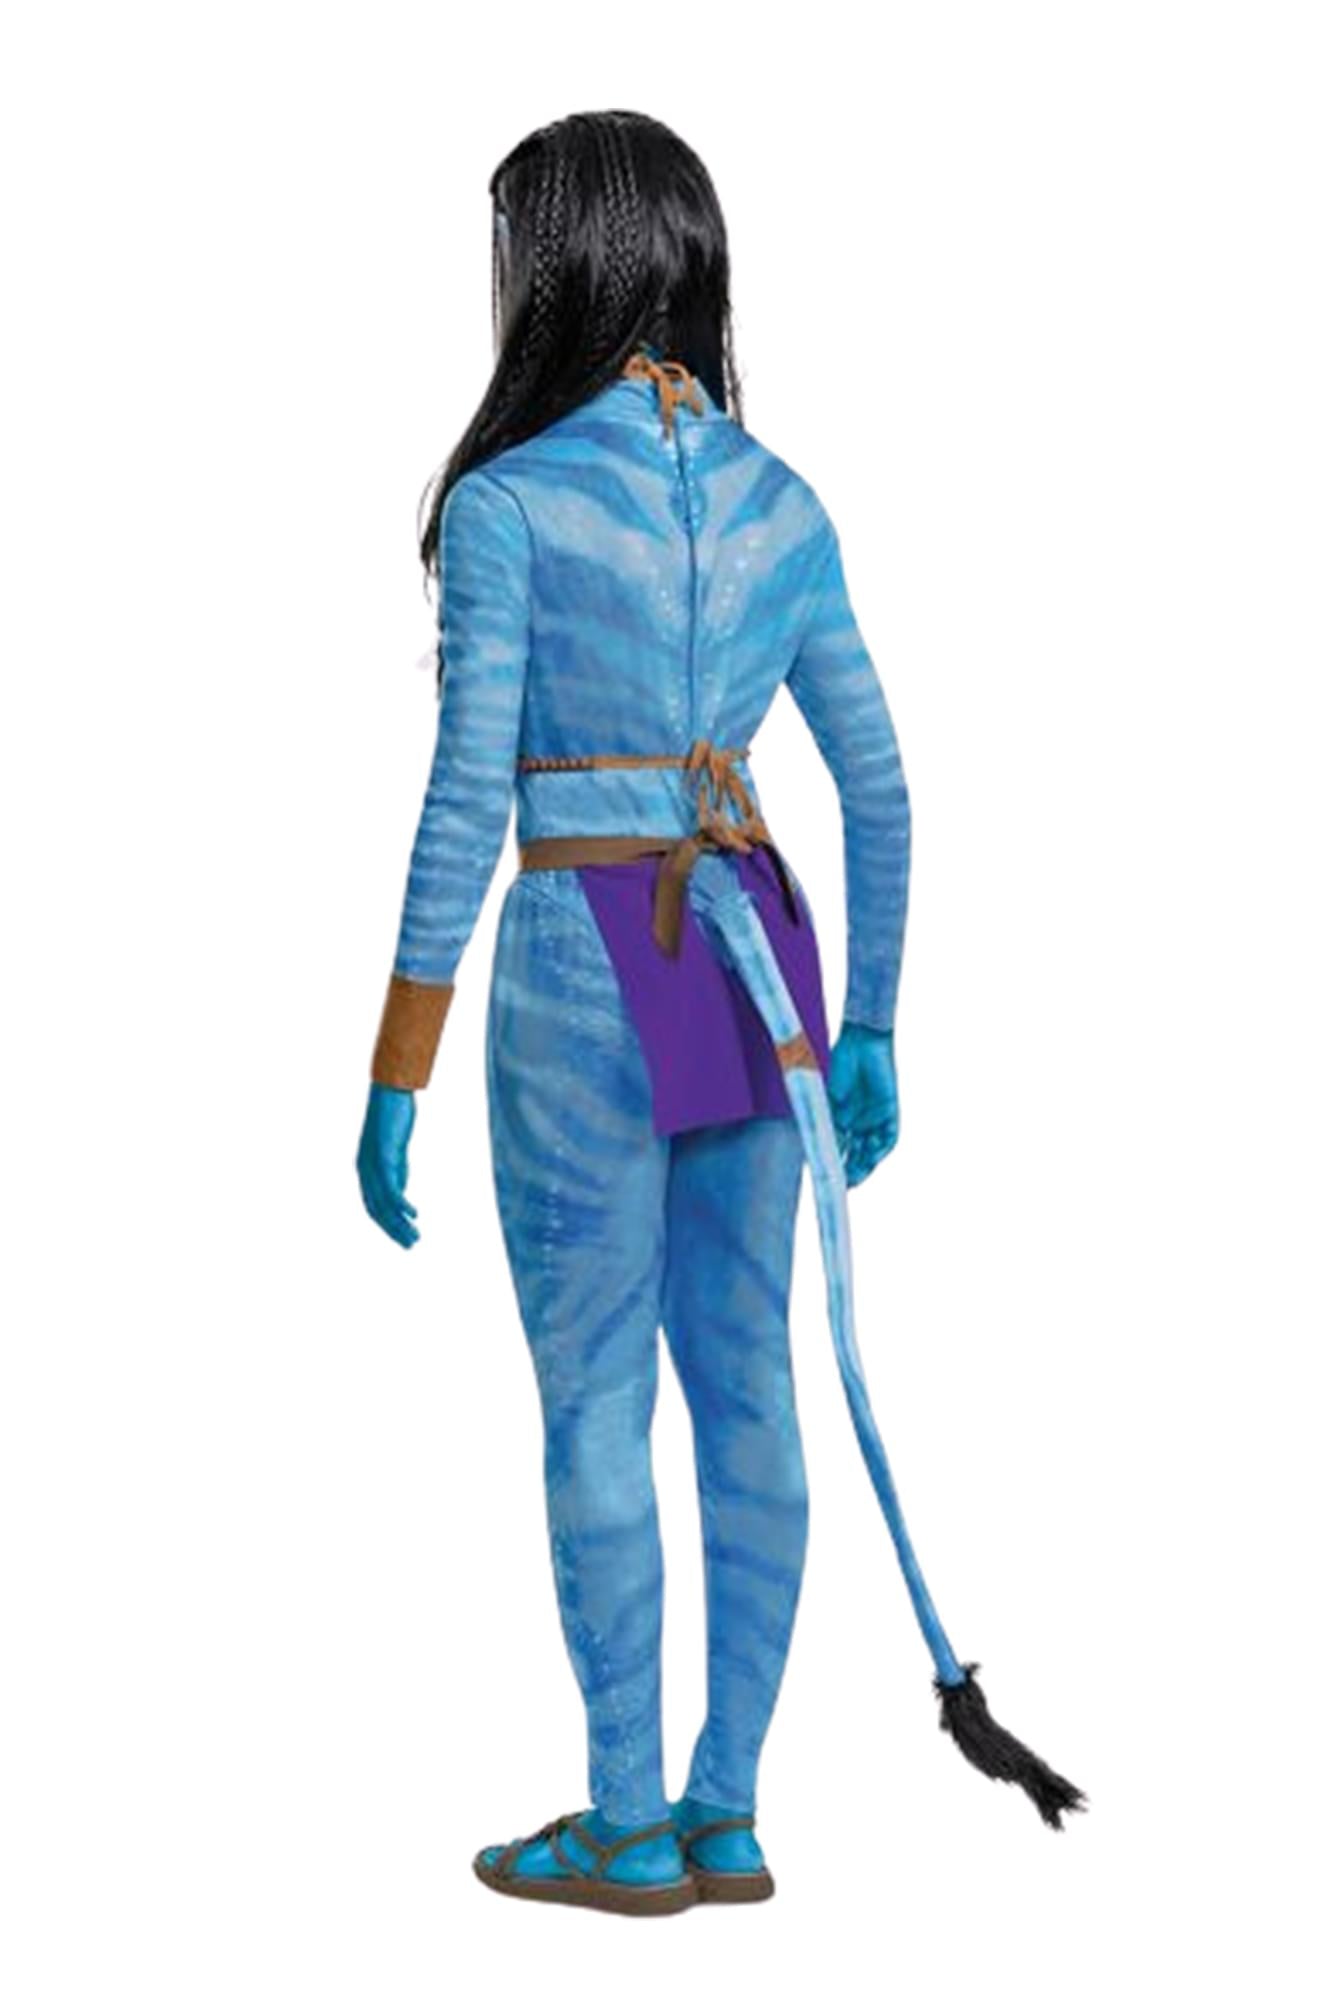 Avatar 2 Neytiri Deluxe Adult Costume